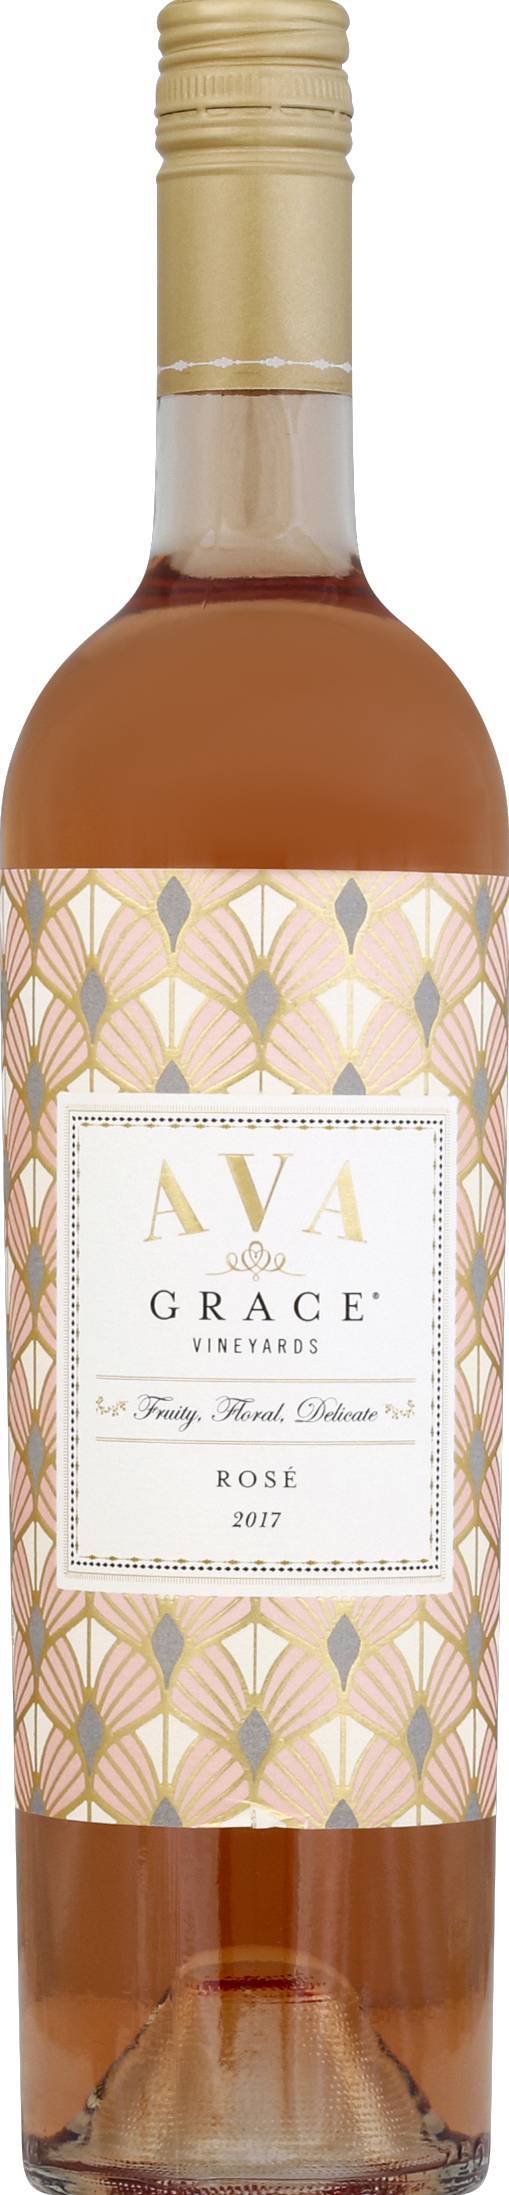 Ava Grace Vineyards California Rose Wine 2017 (750 ml)